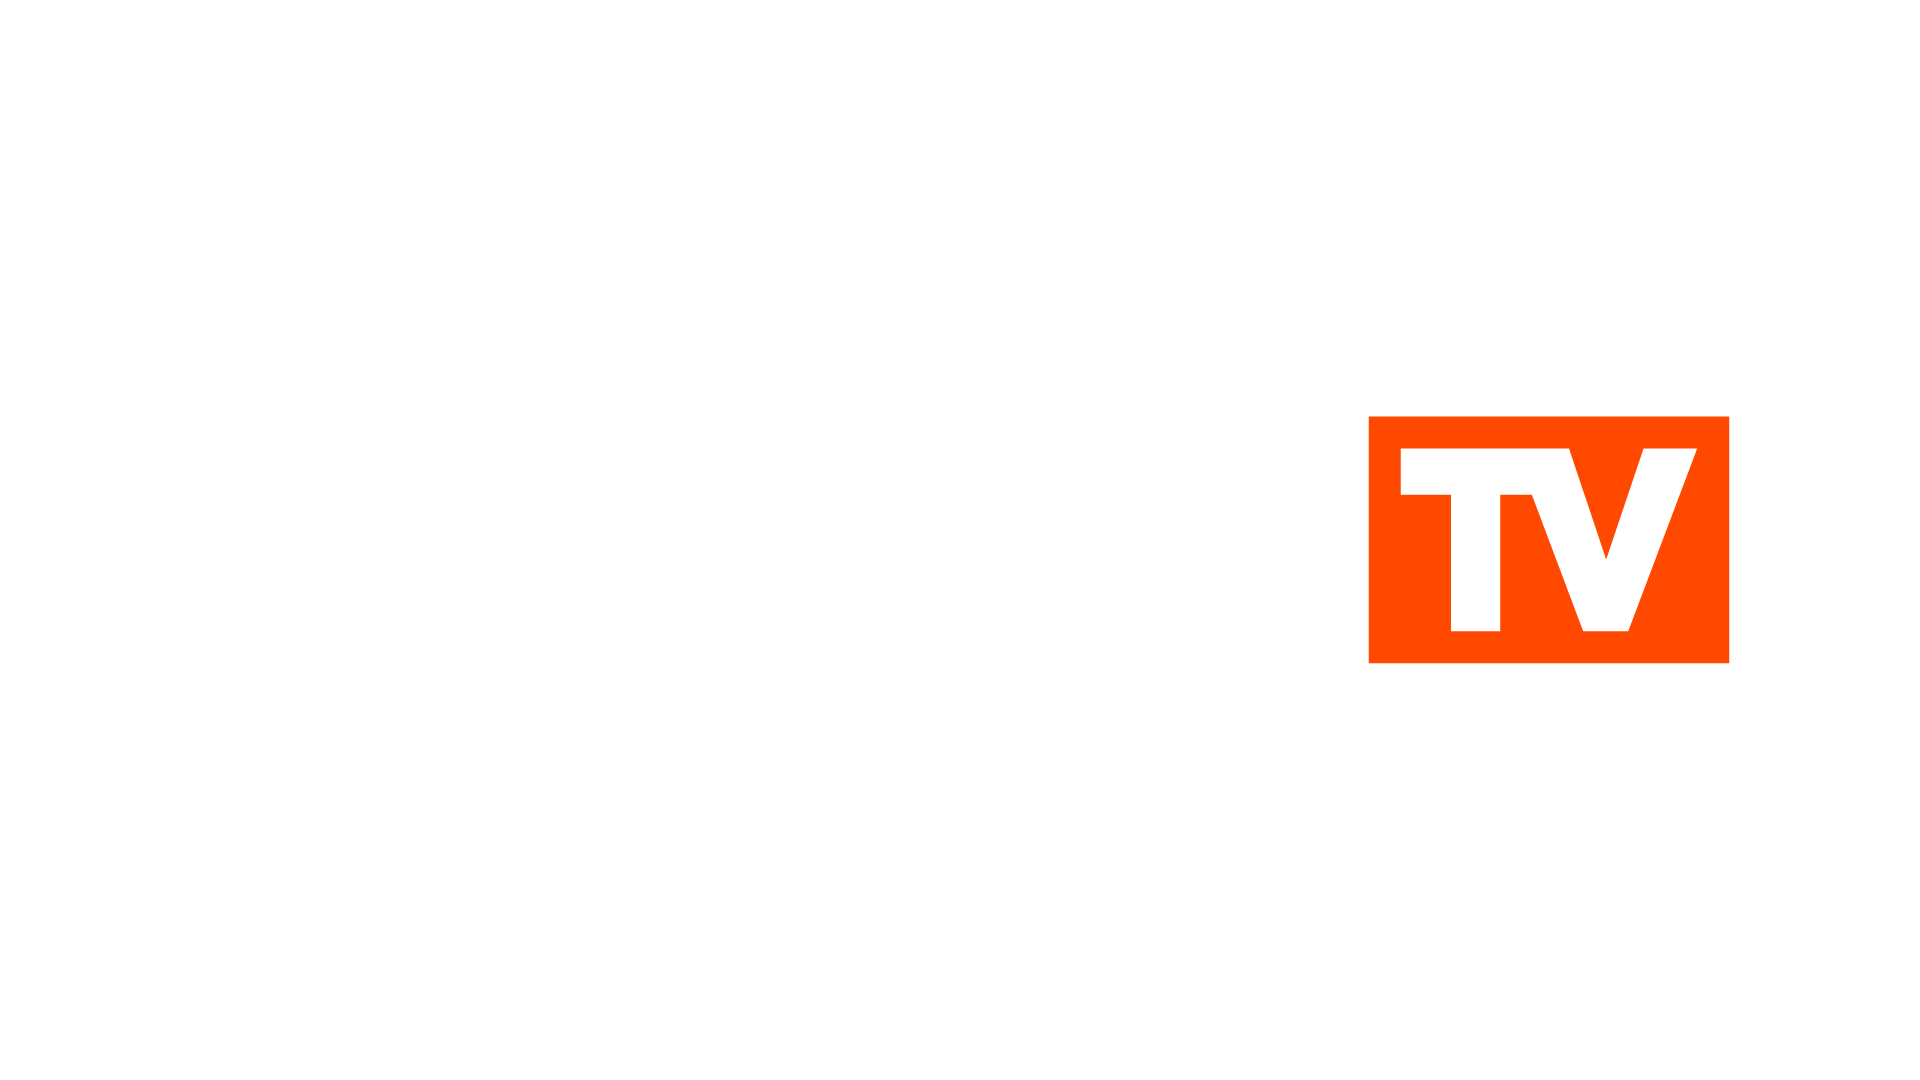 Tg media ru. Телеканал Bridge TV. Логотип телеканала бридж ТВ. Телеканал Bridge логотип. Телеканал Dange TV.